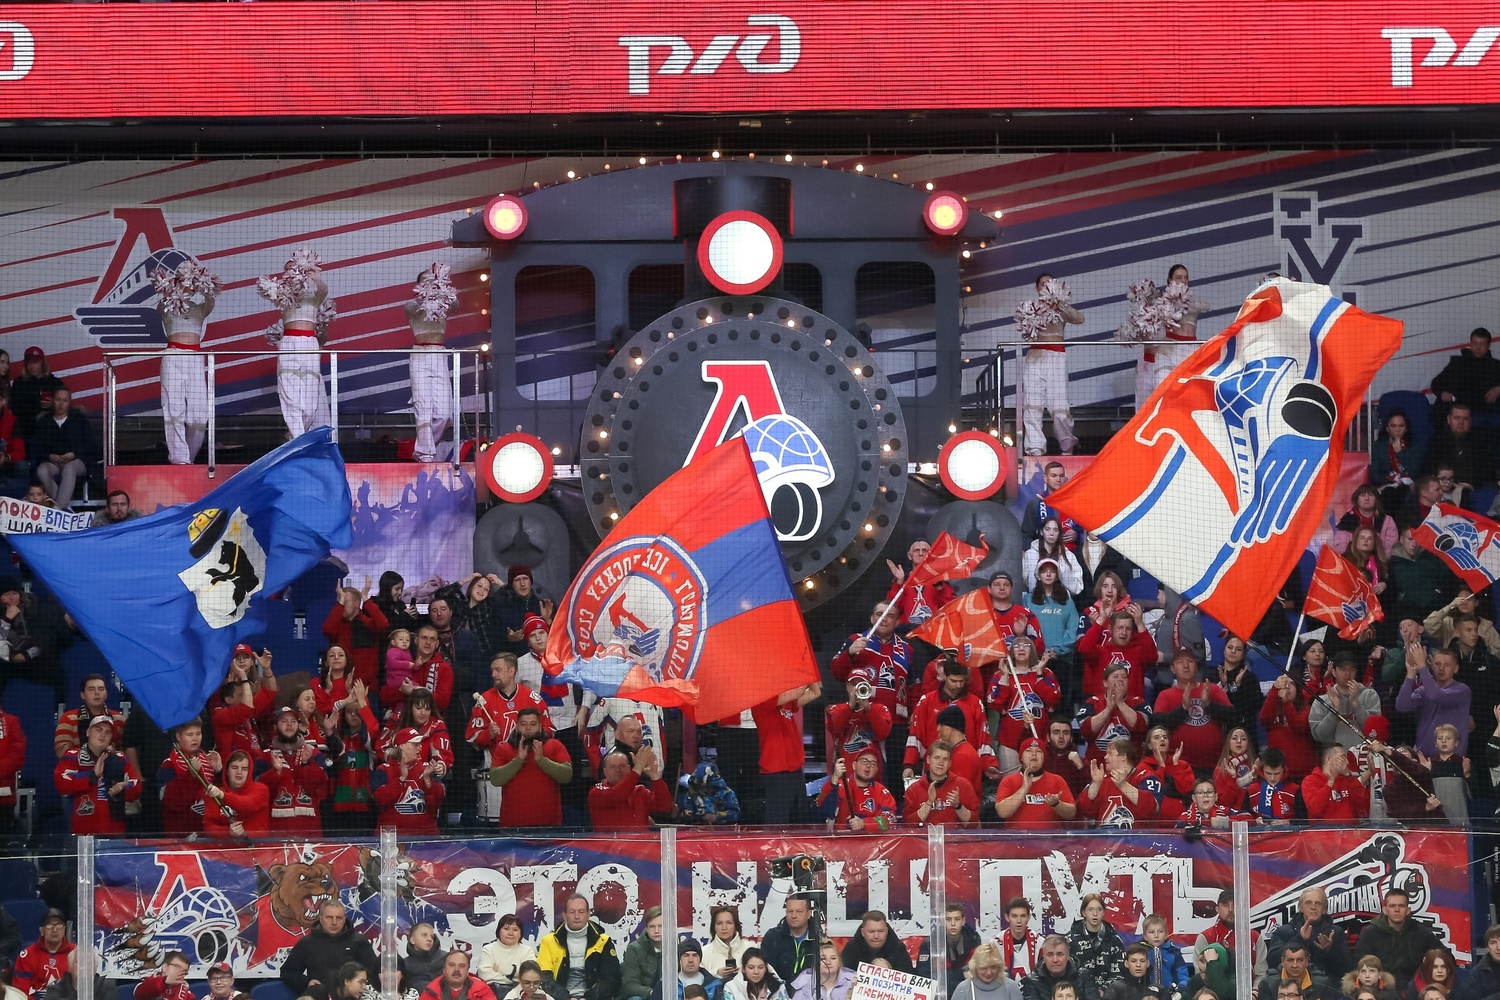 Match between Lokomotiv and Avtomobilist: spectators, emotions and hopes